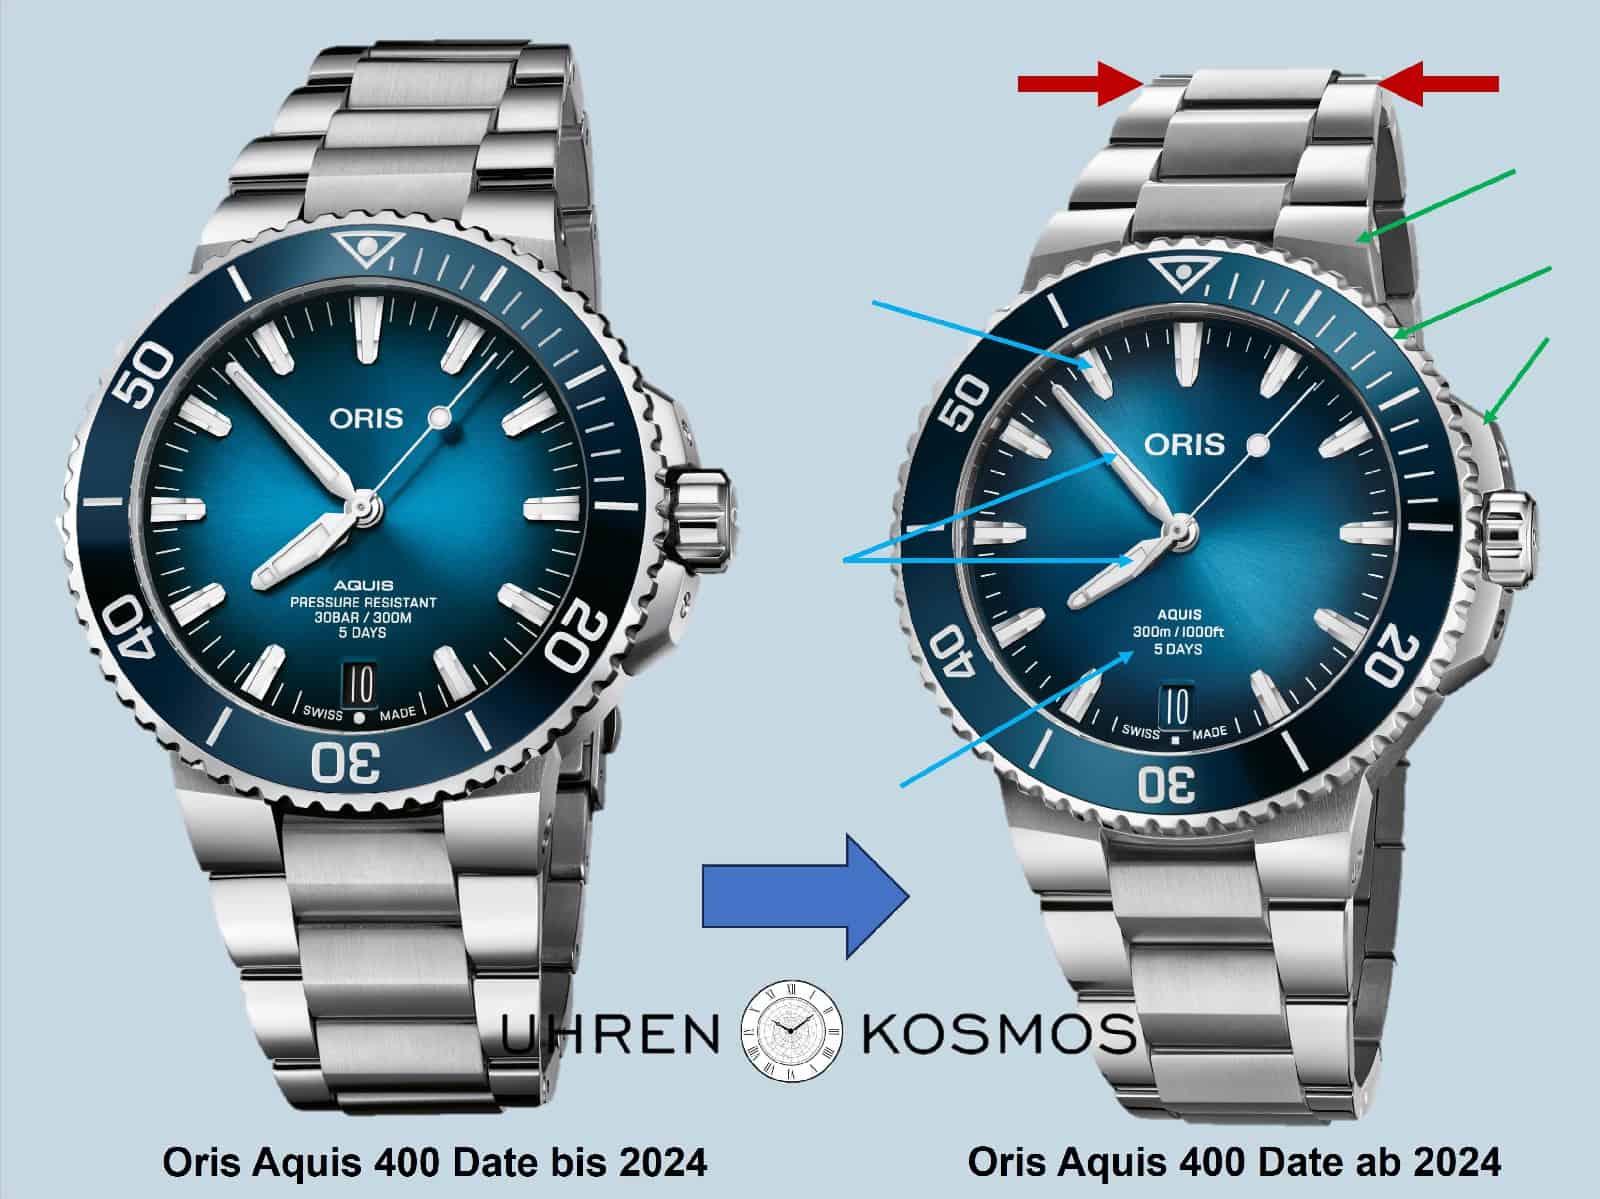 Oris Aquis Date Cal. 400 Vergleich vor und ab 2024 (C) Uhrenkosmos